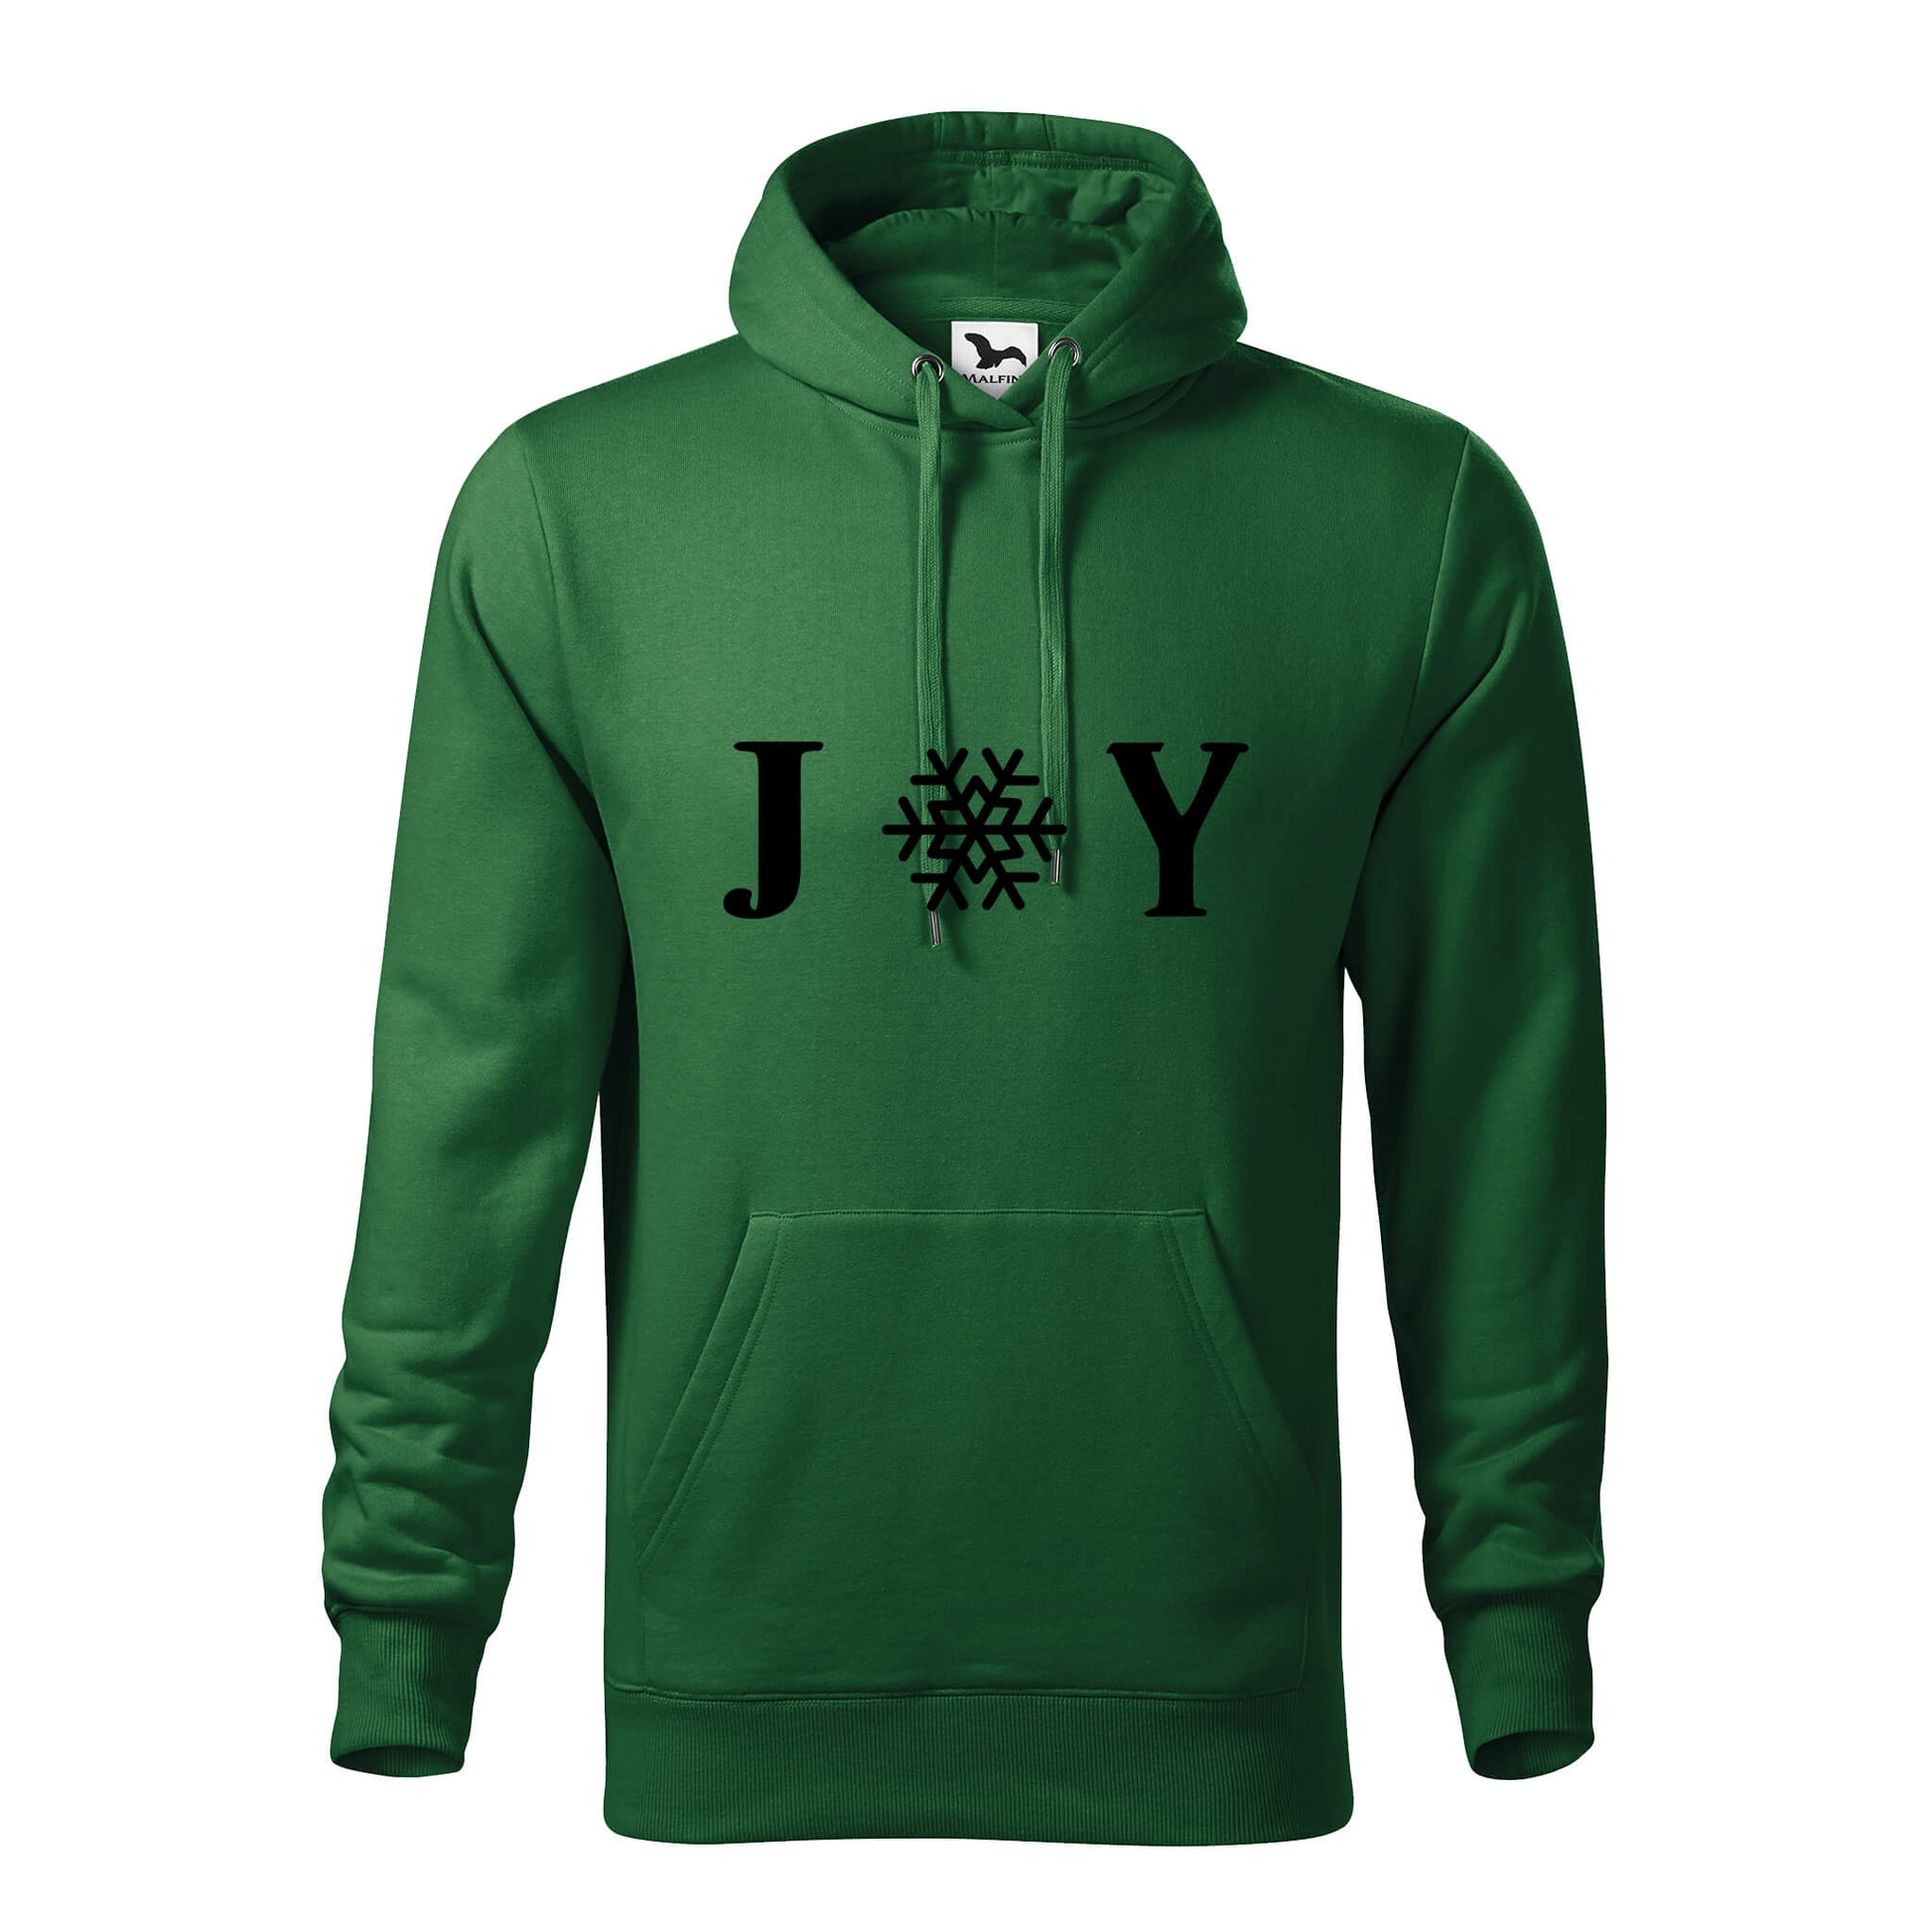 Joy snowflake rdart hoodie - rvdesignprint